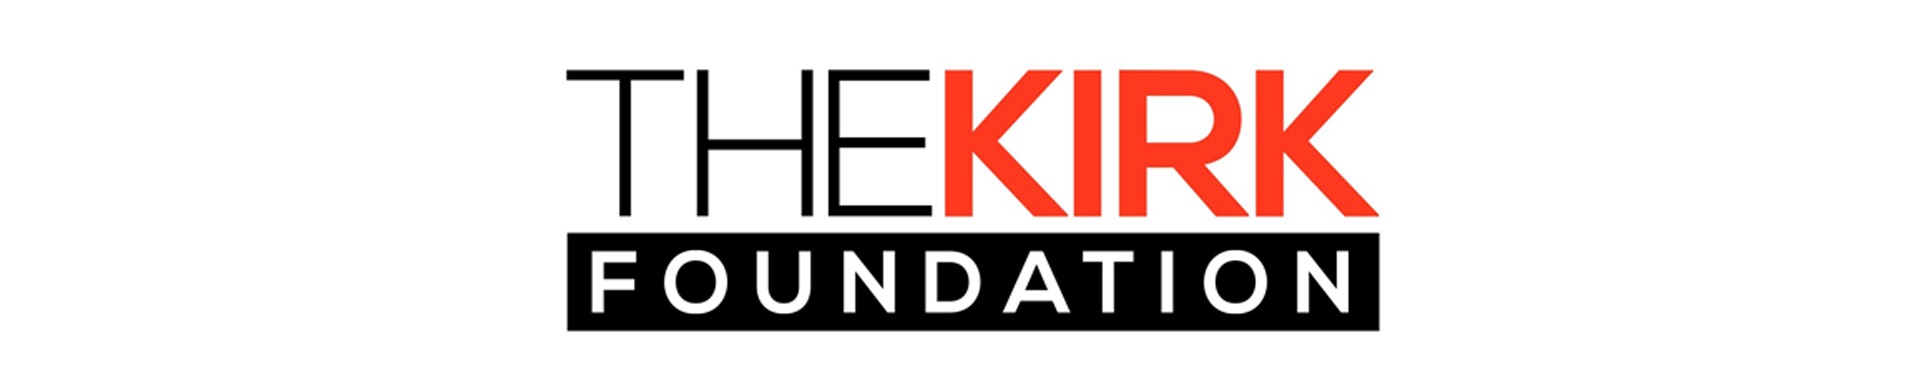 The Kirk foundation logo